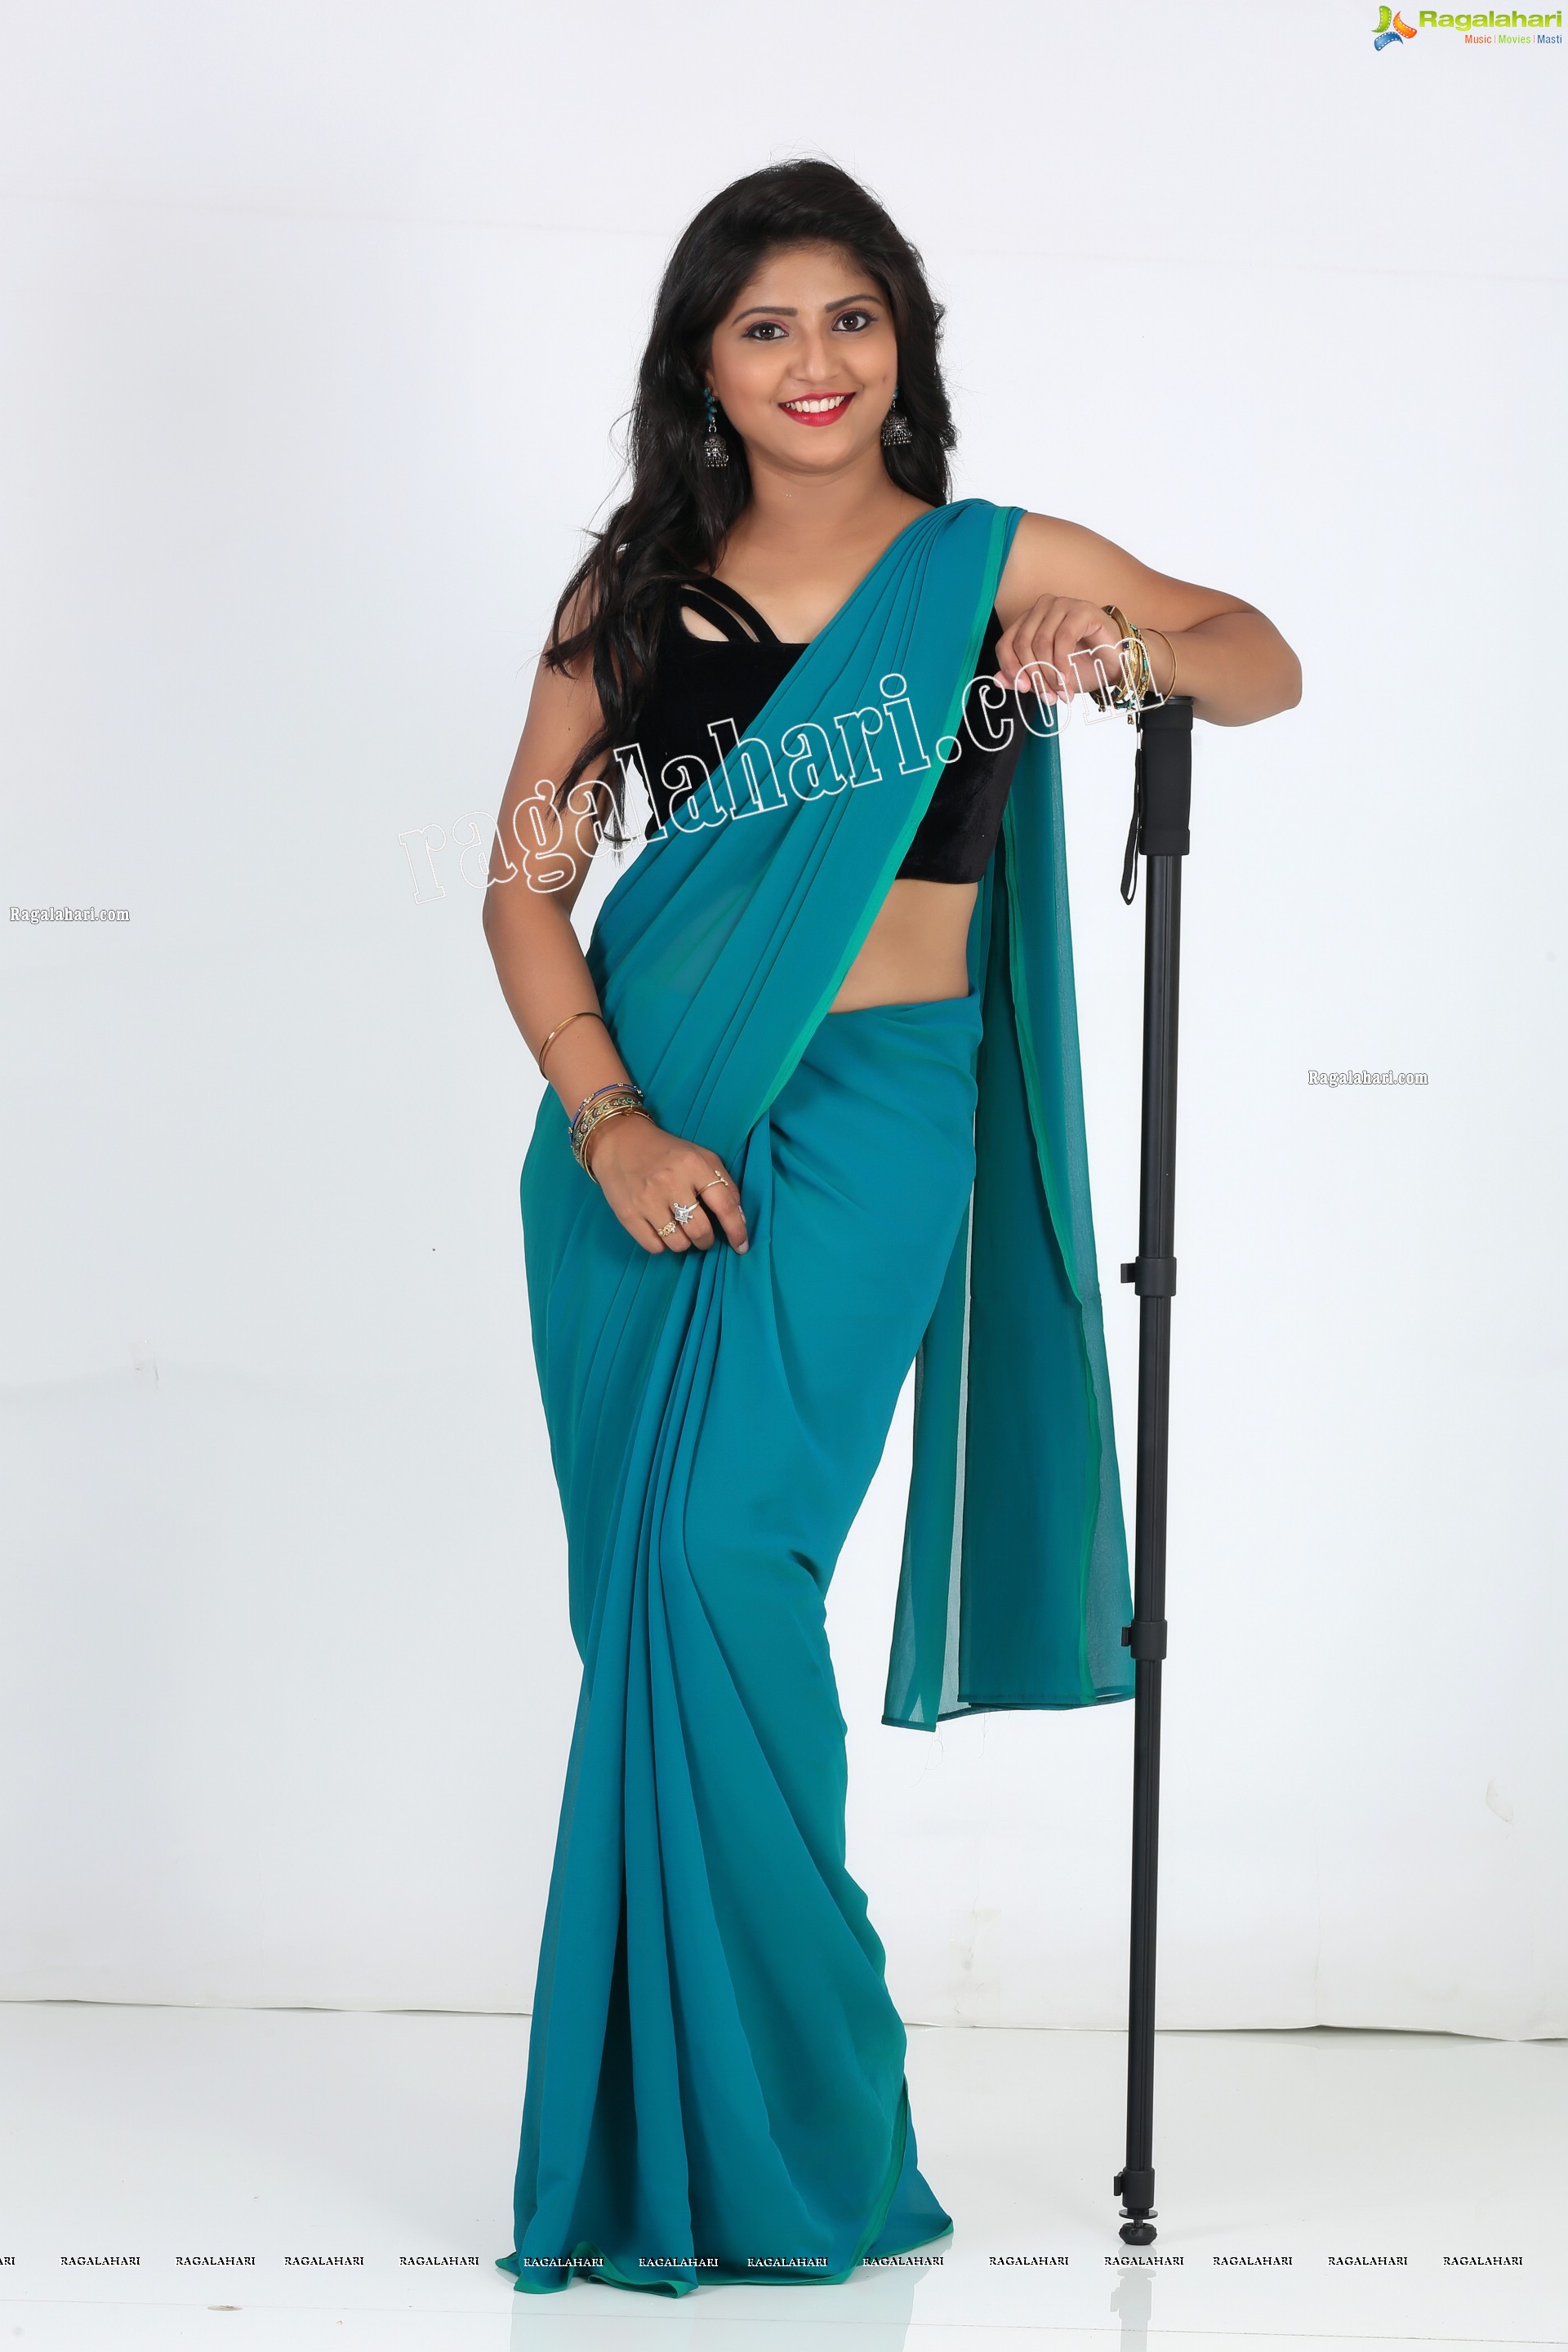 Shabeena Shaik in Light Teal Blue Saree Exclusive Photo Shoot